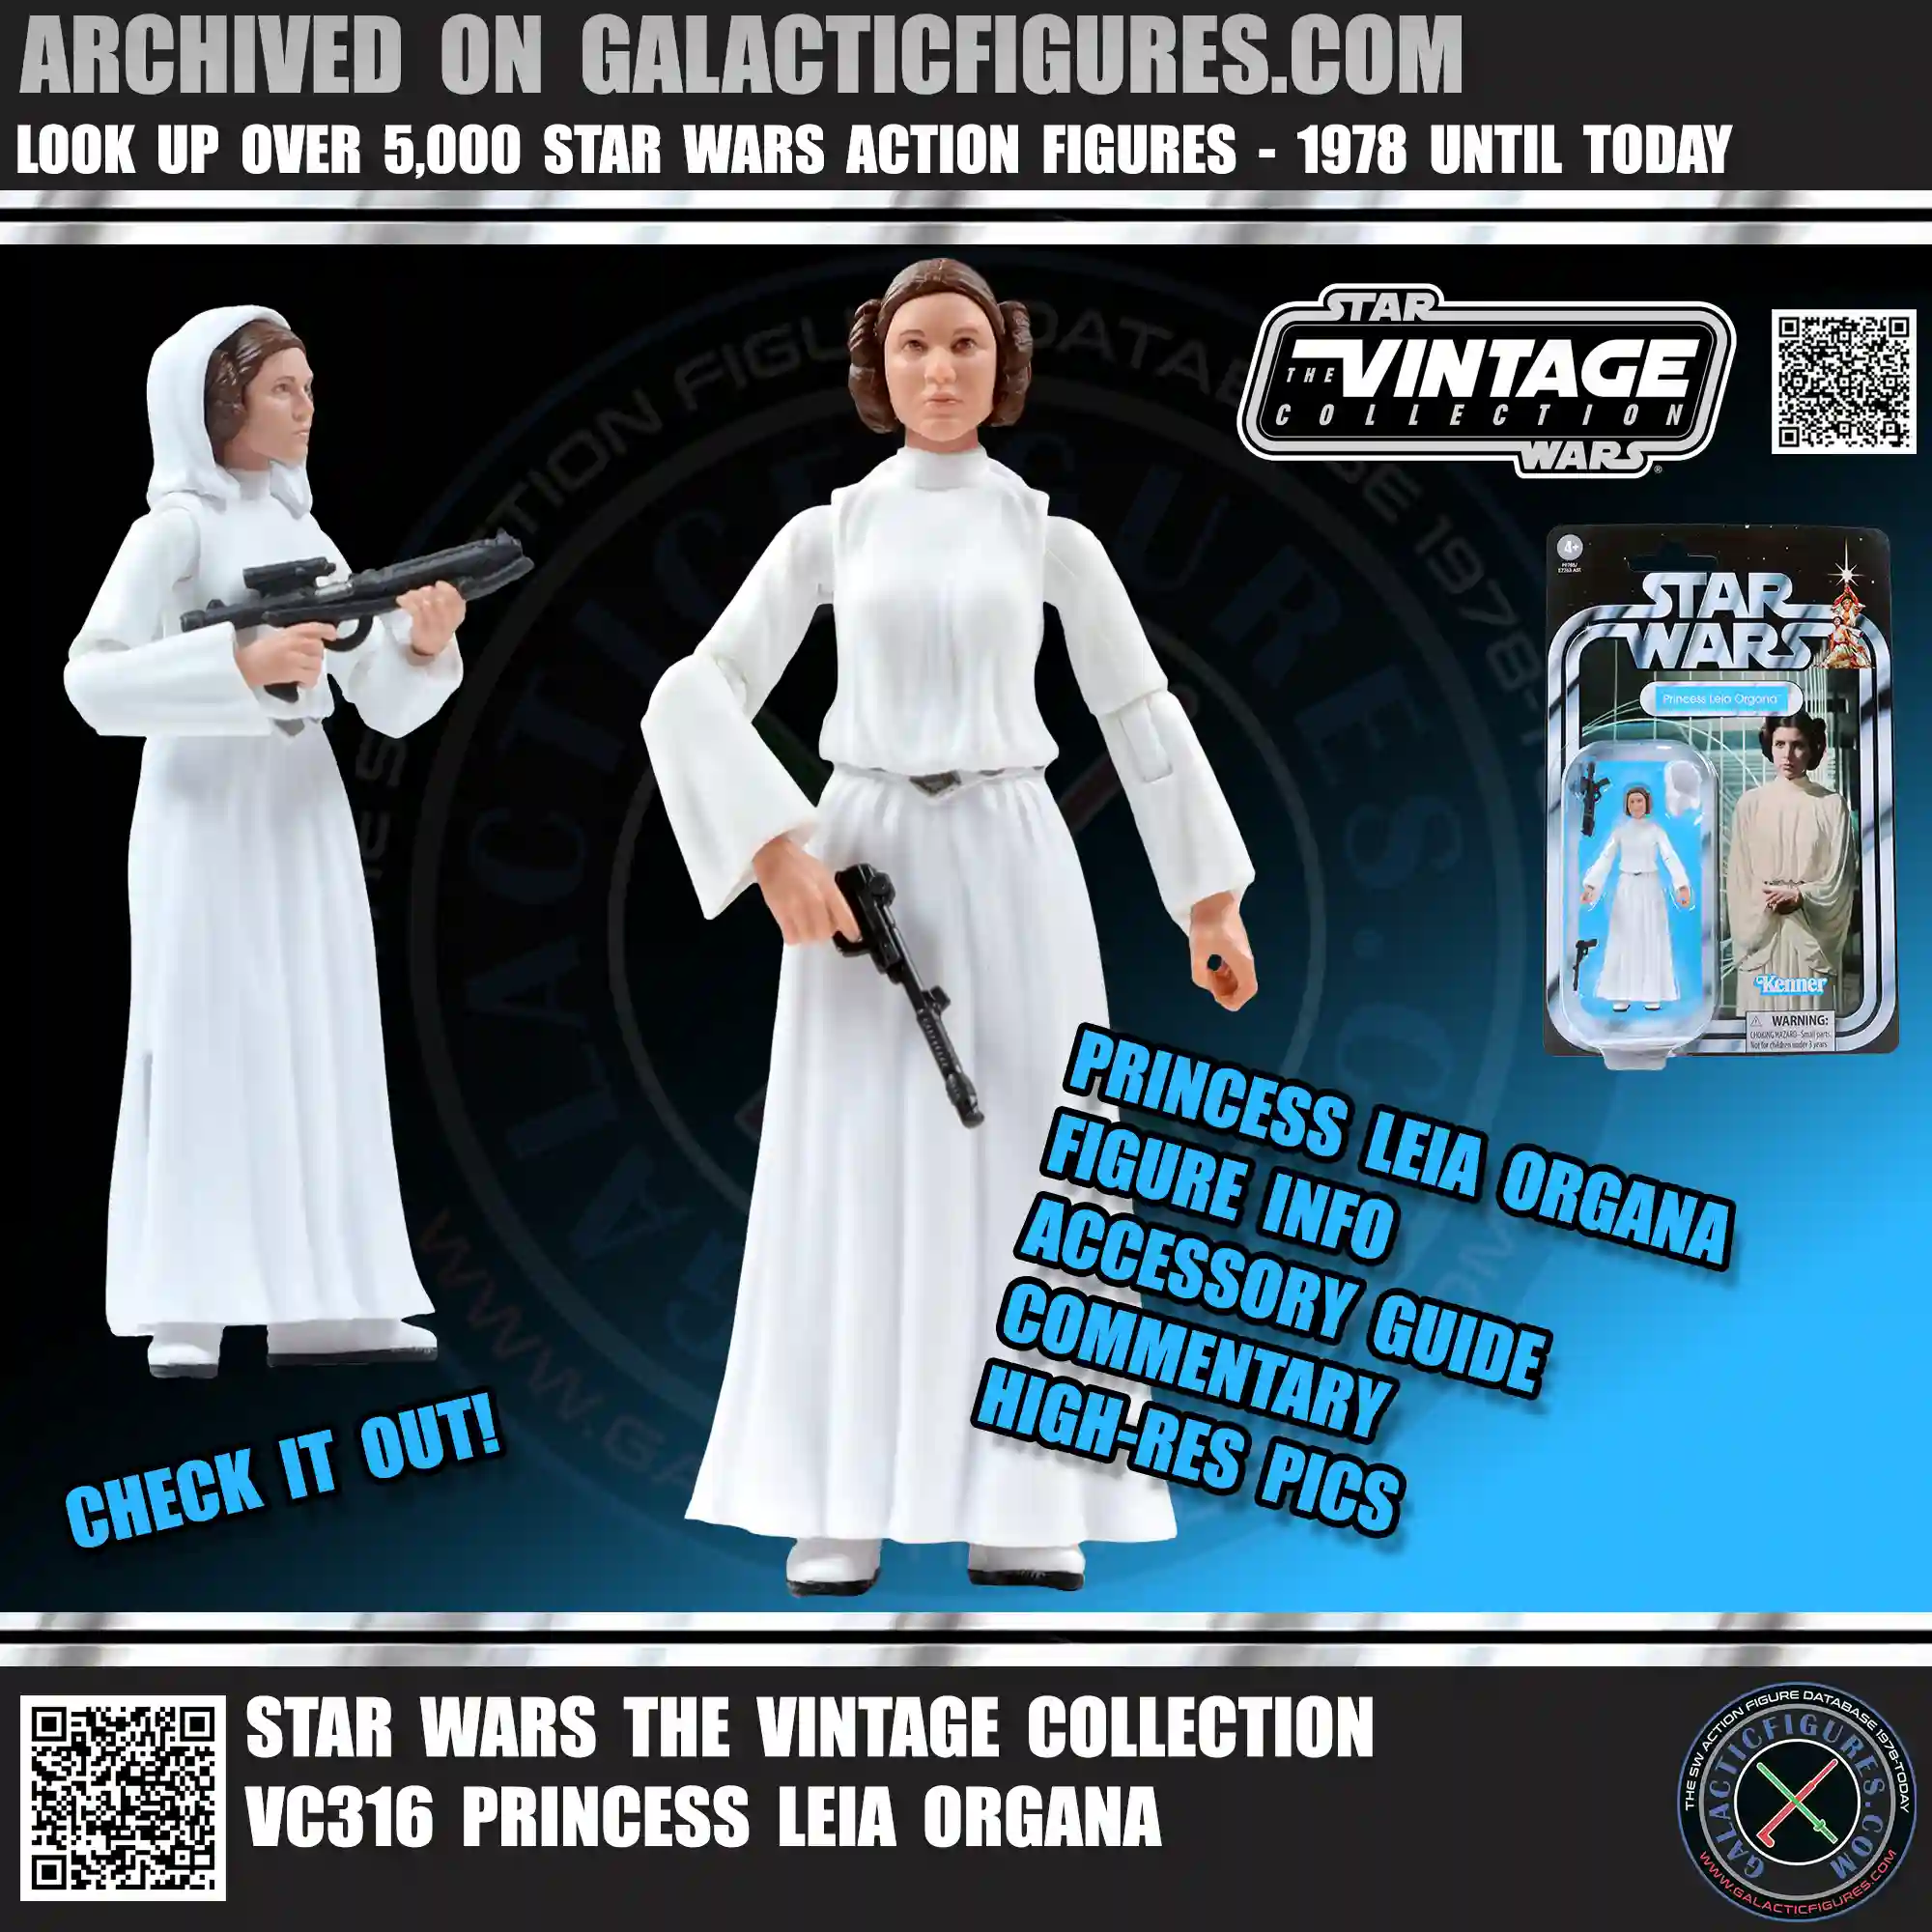 VC316 Princess Leia Organa Added